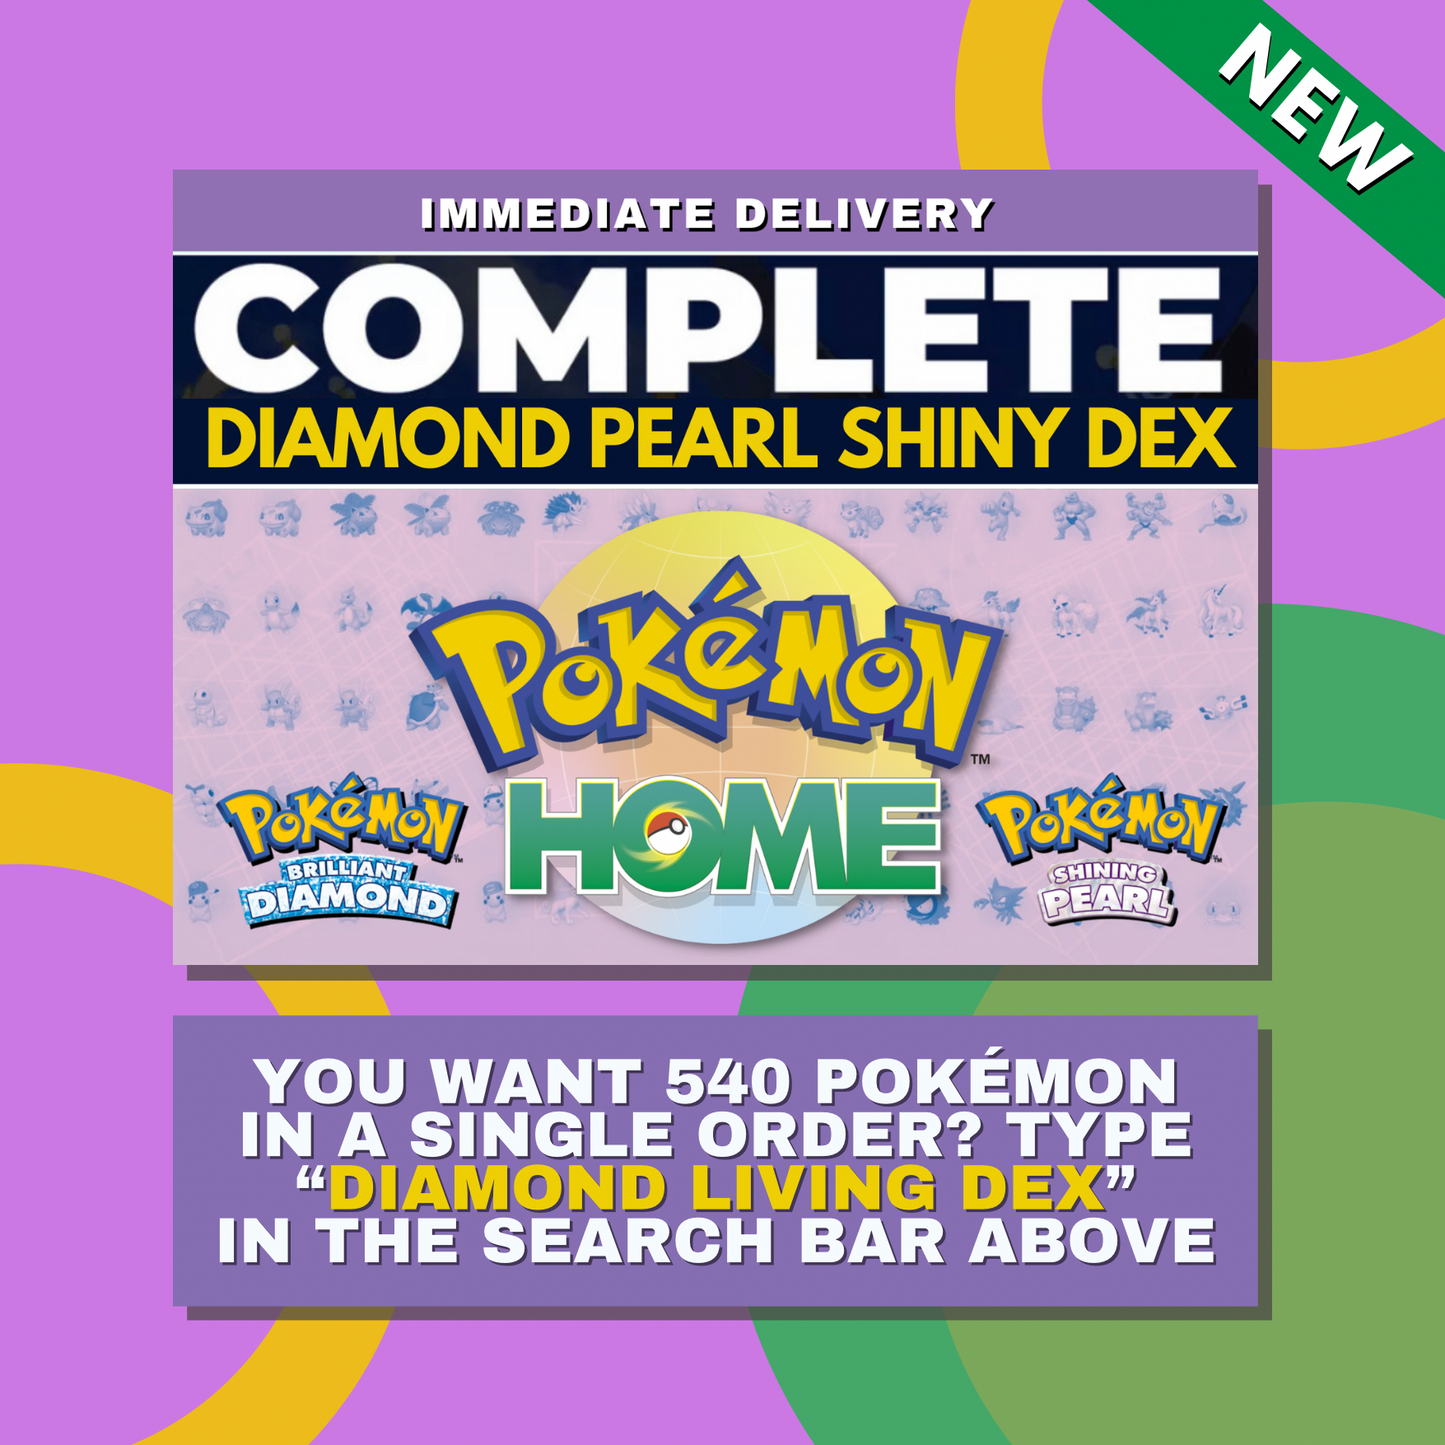 Sableye  Shiny ✨ or Non Shiny Pokémon Brilliant Diamond Shining Pearl Battle Ready 6 IV Competitive 100%  Legit Level 100 Customizable Custom OT